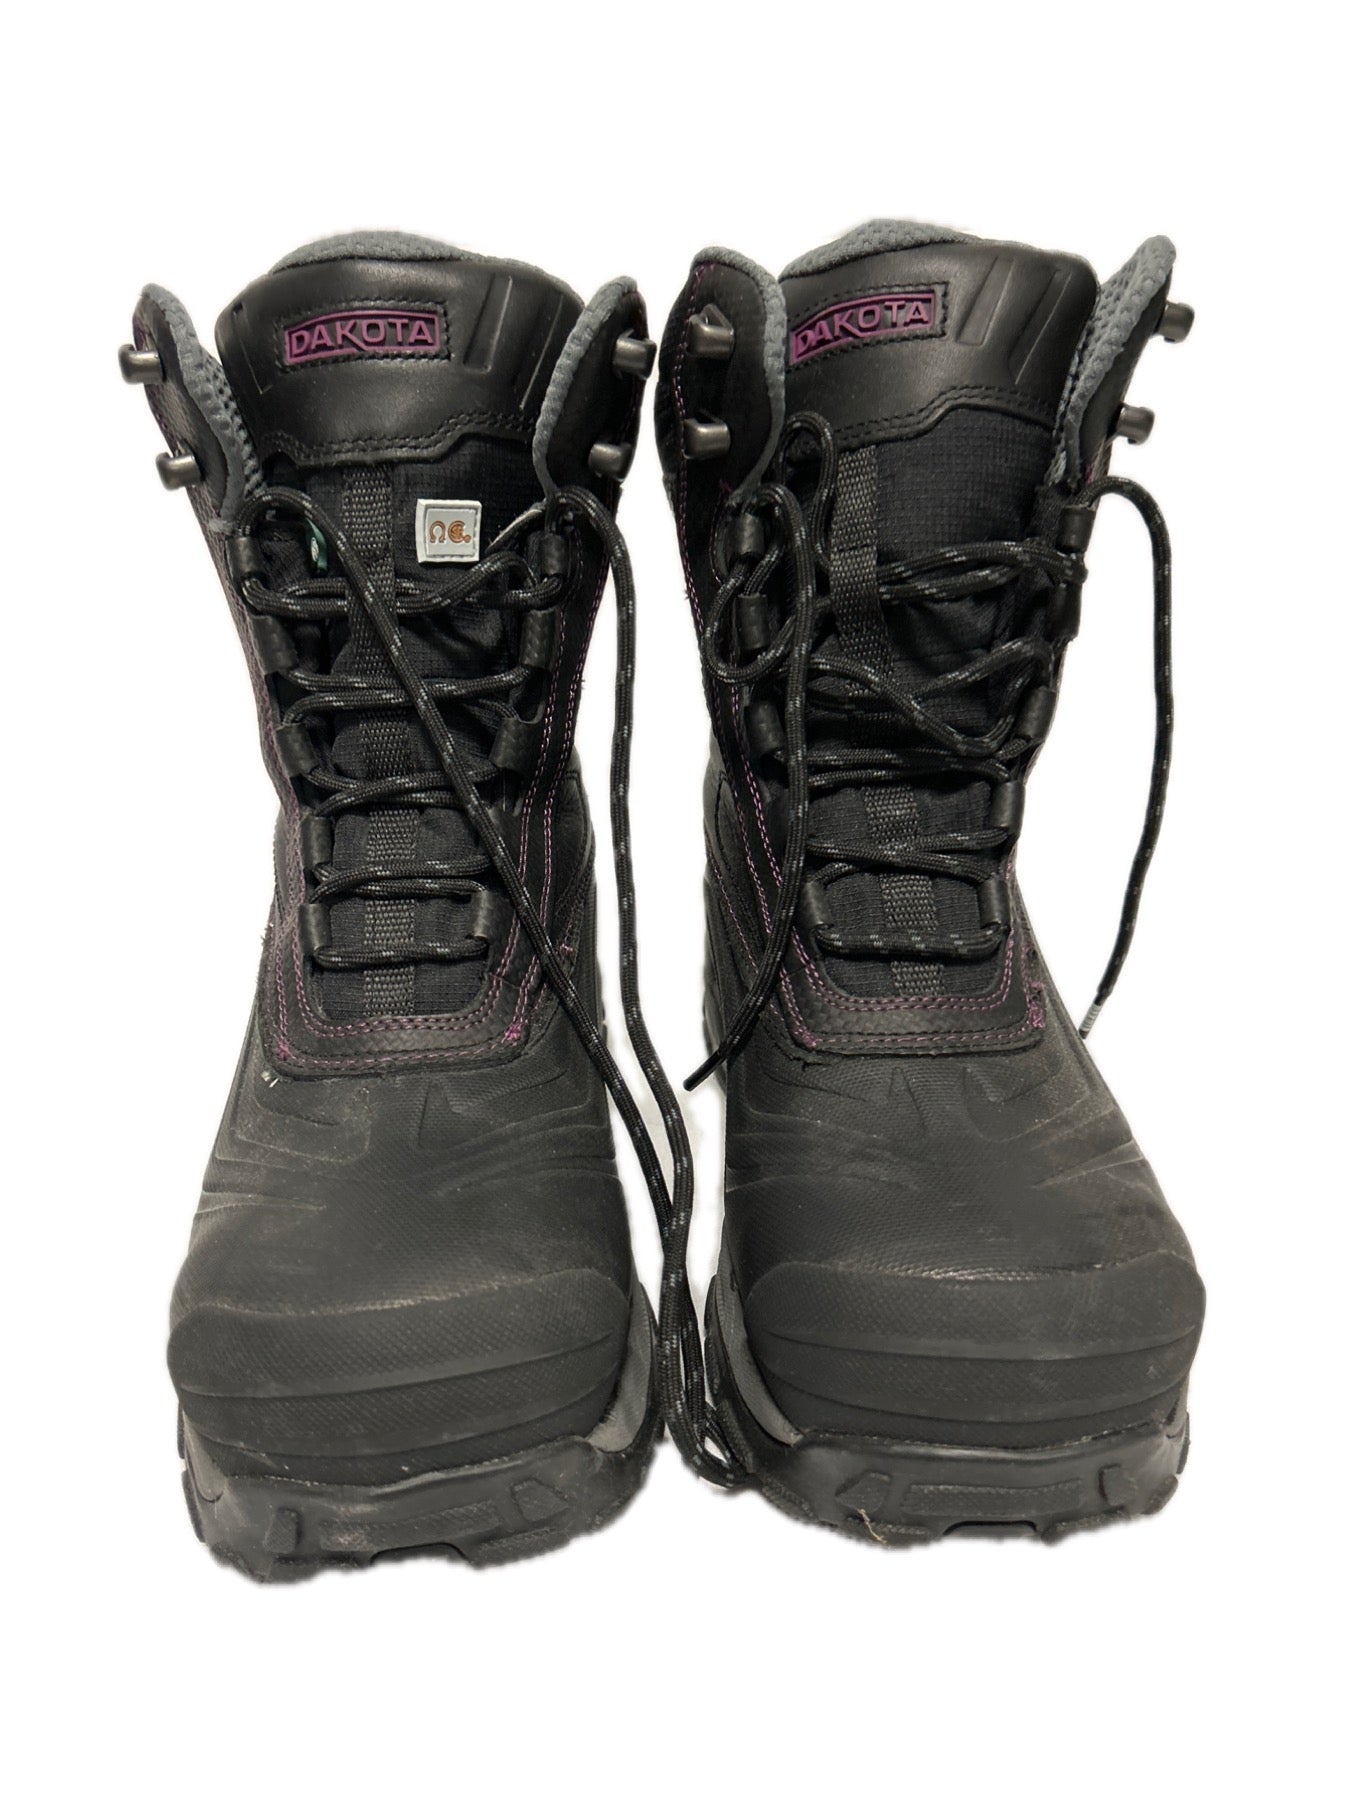 Dakota Winter Safety Boots (7)